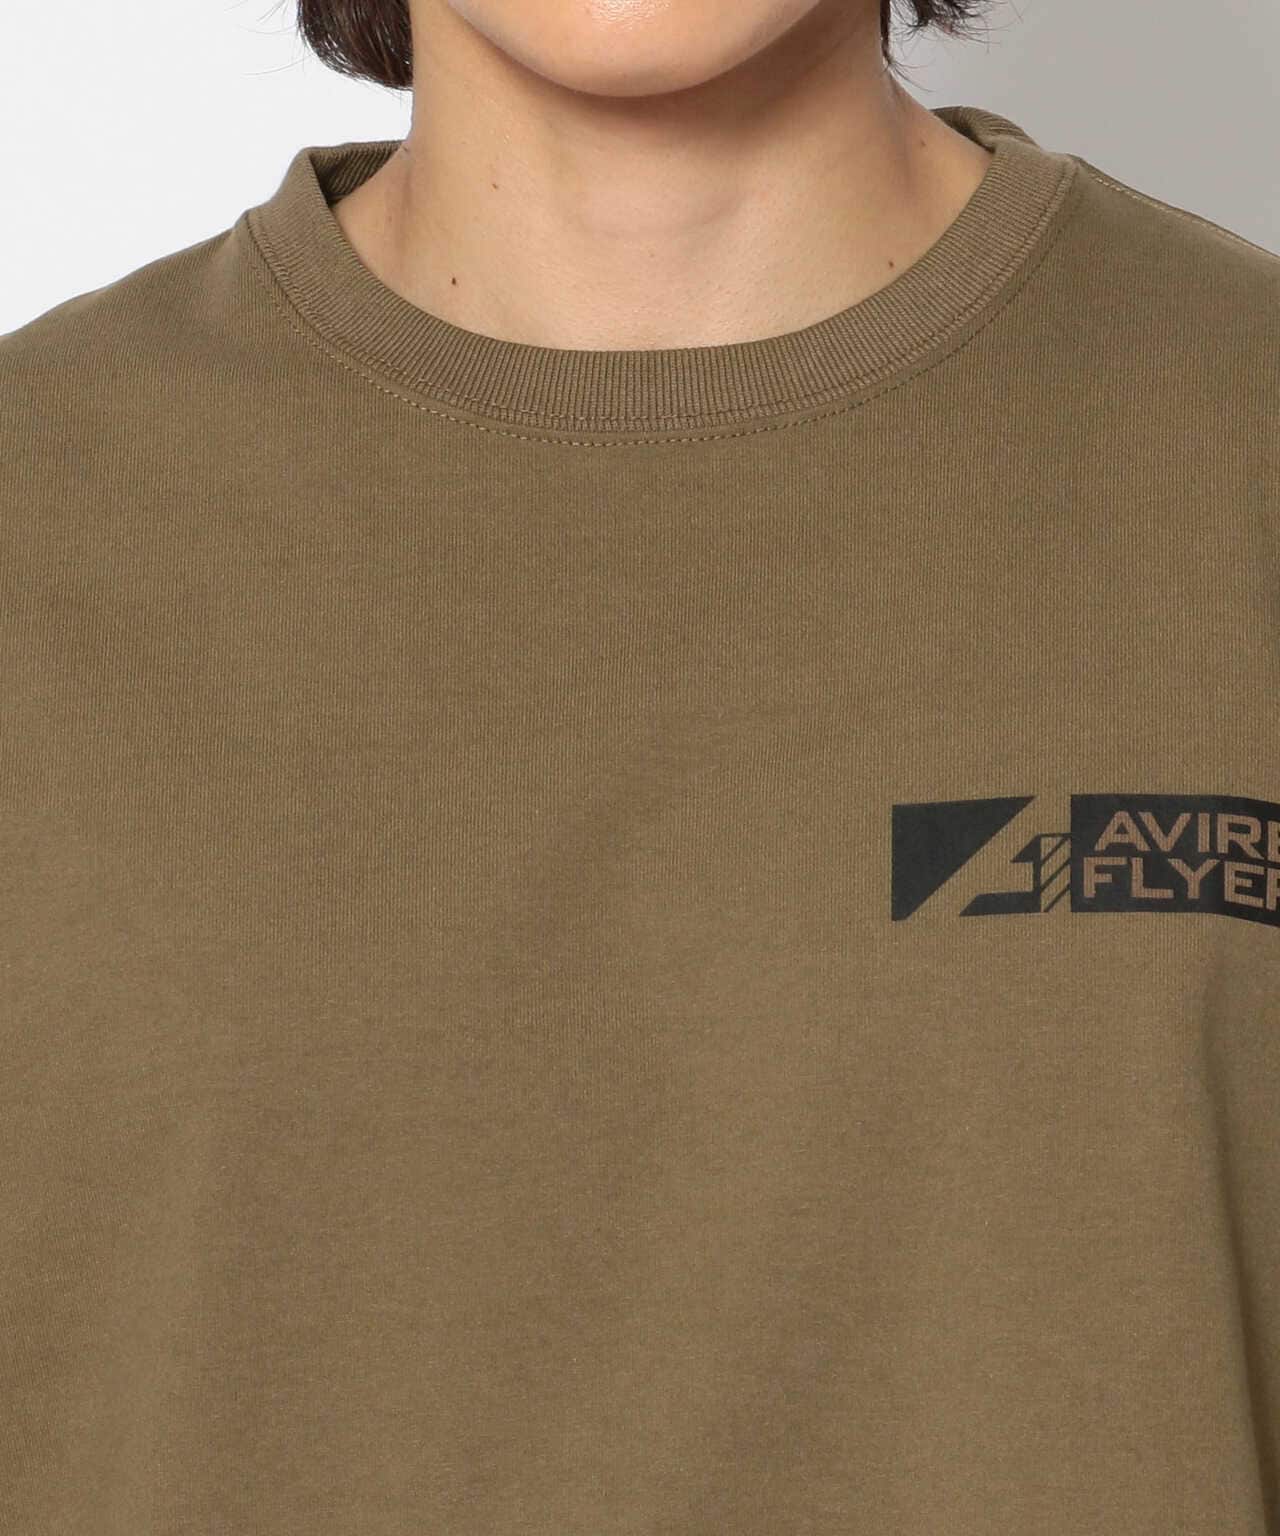 AVIREX FLYER'S】フライヤーズ Tシャツ/FLYER'S T-SHIRT | AVIREX